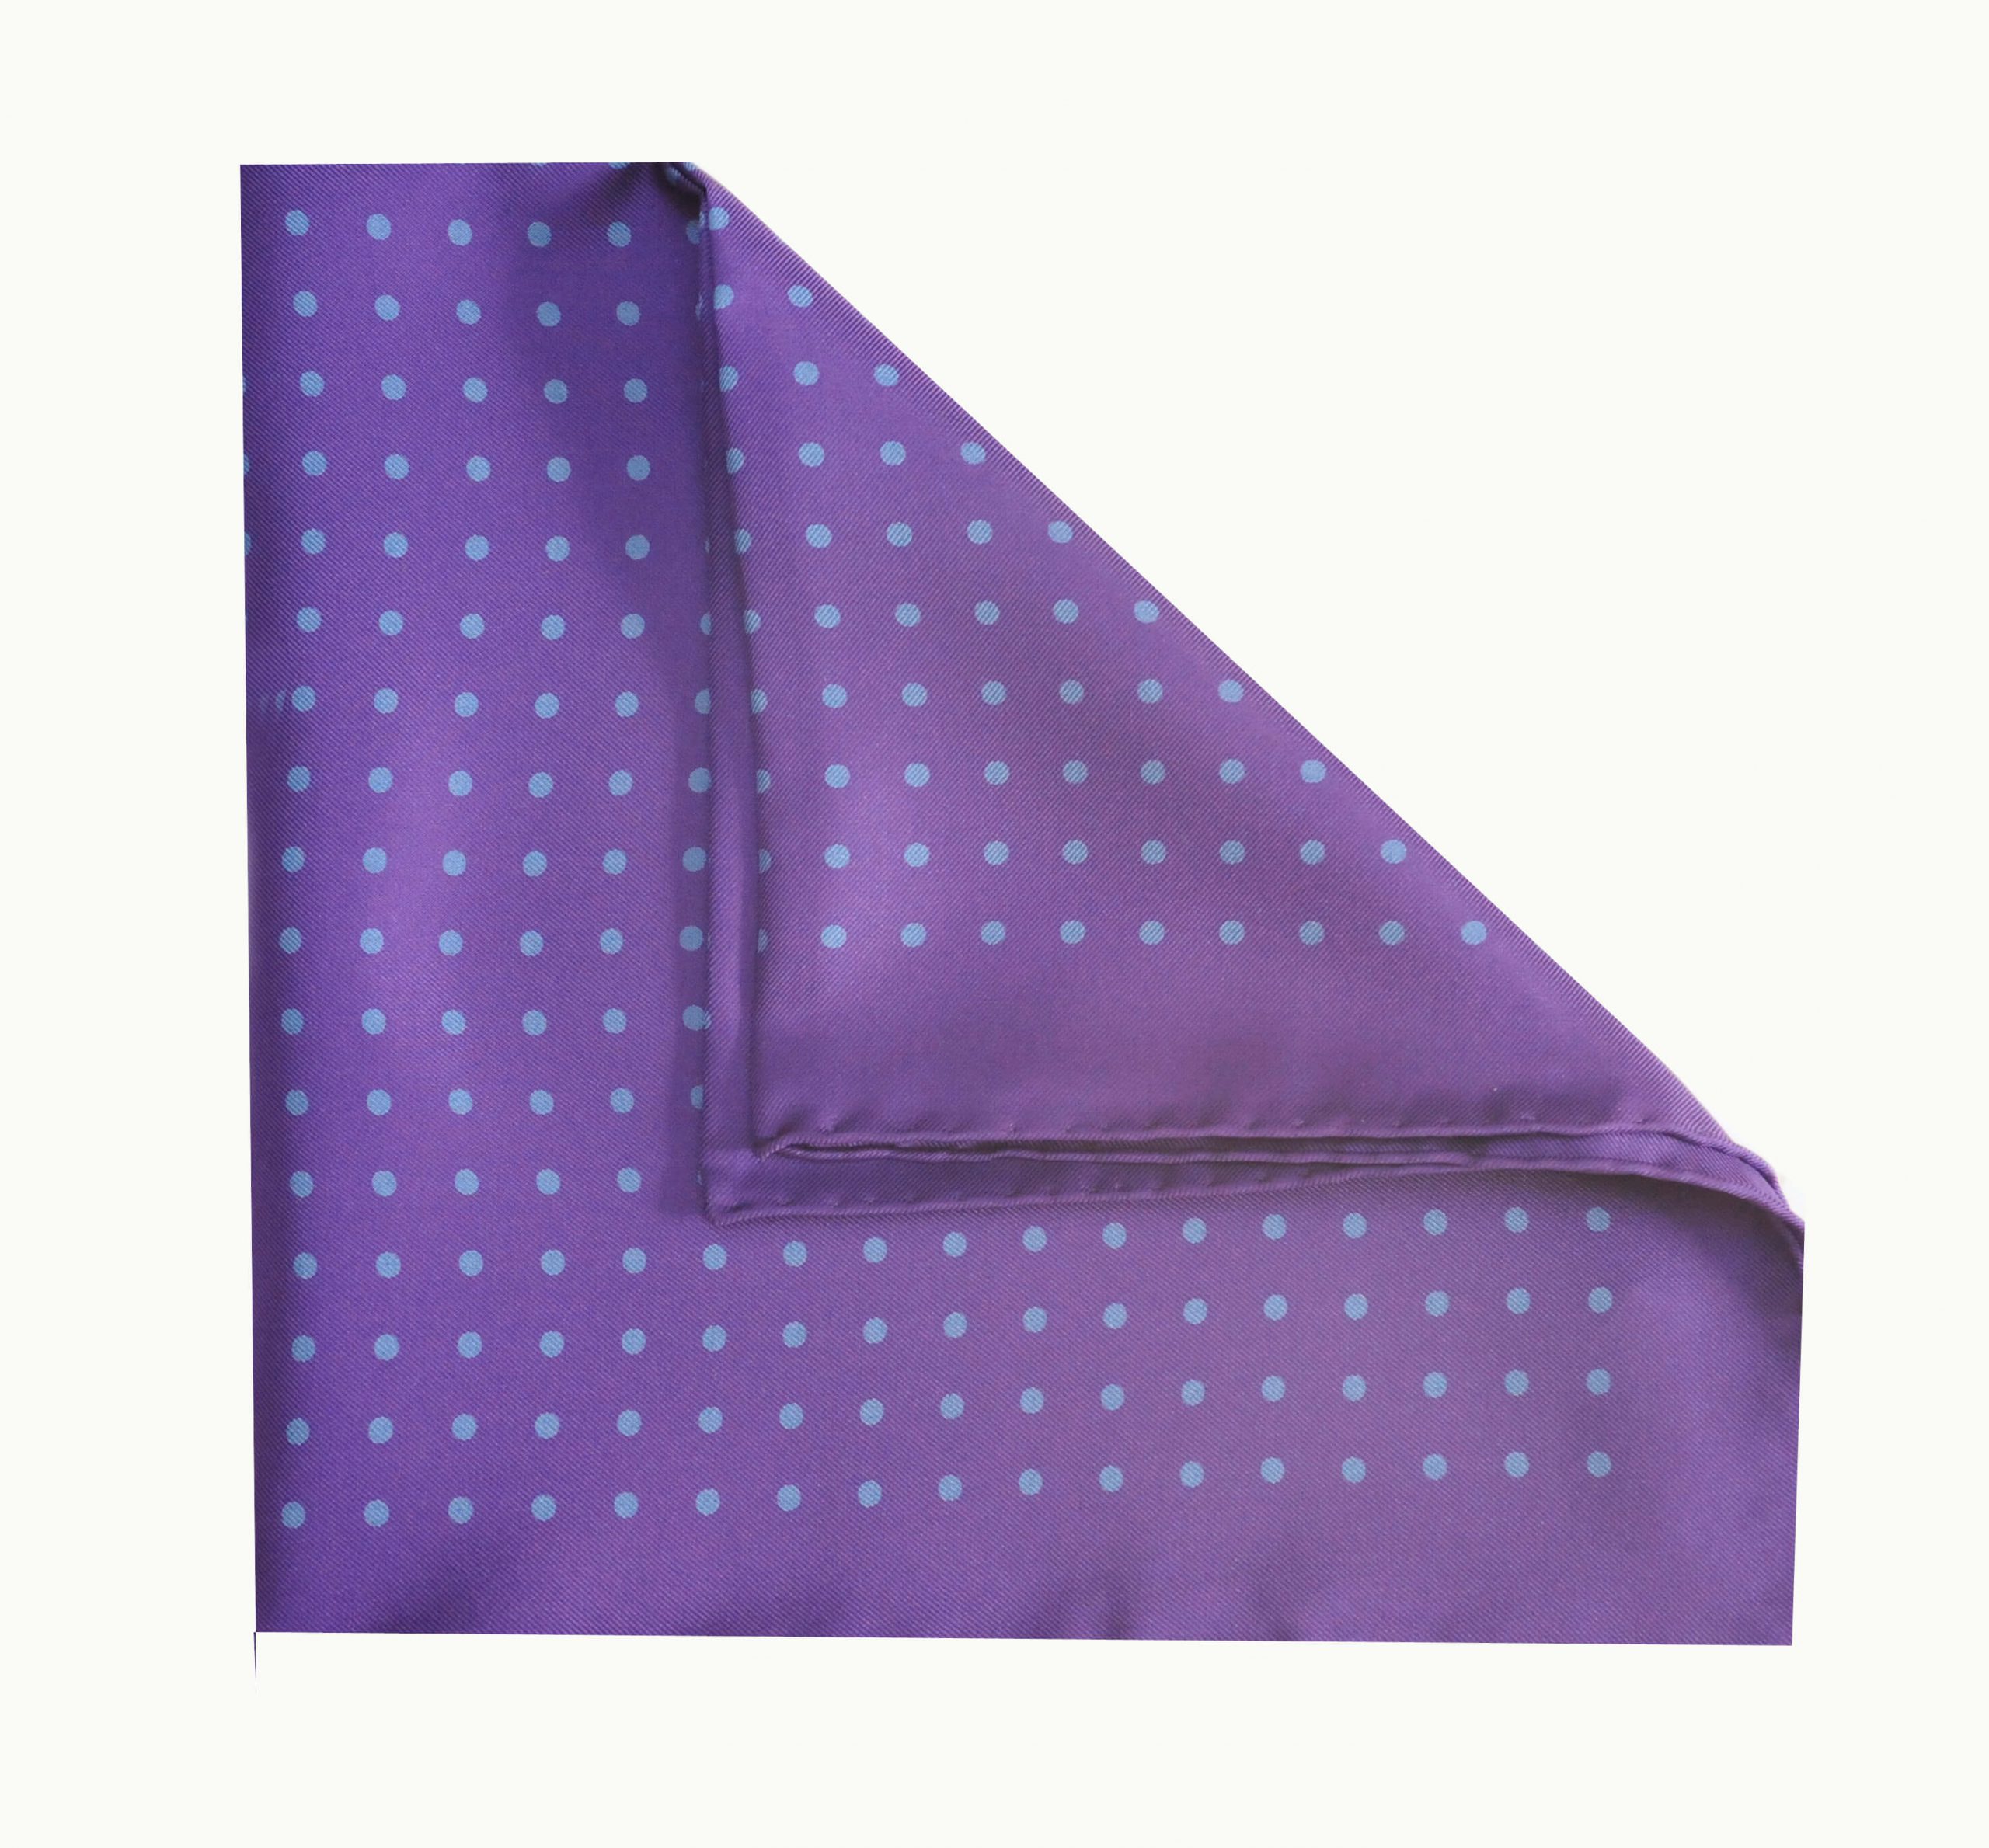 Jack - Polka Dot Silk Pocket Square in Purple with Blue Spots